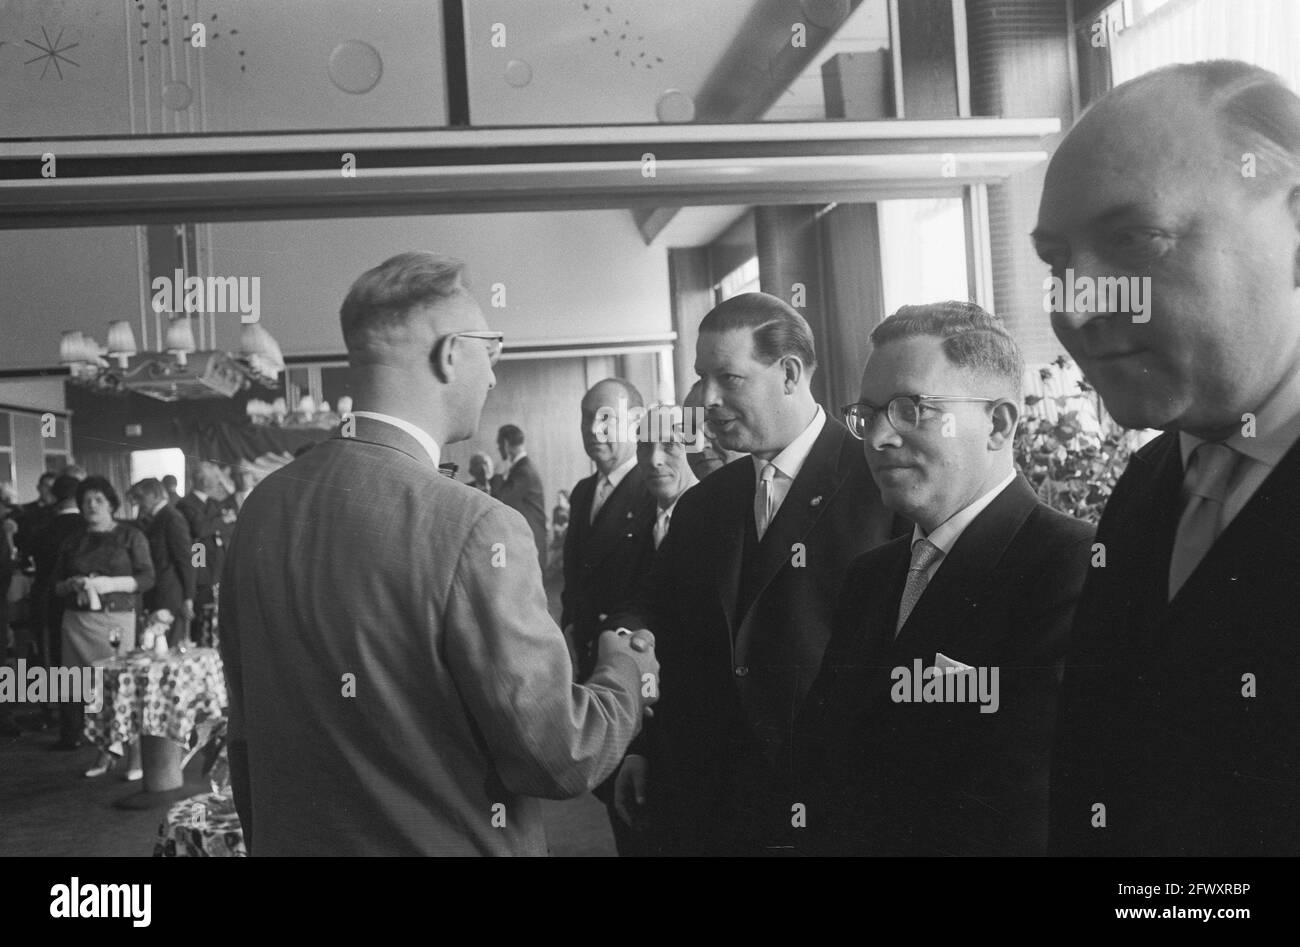 Reception 50-year Royal Dutch Billiards Union. Van t Hull congratulates, 17 September 1961, receptions, The Netherlands, 20th century press agency pho Stock Photo